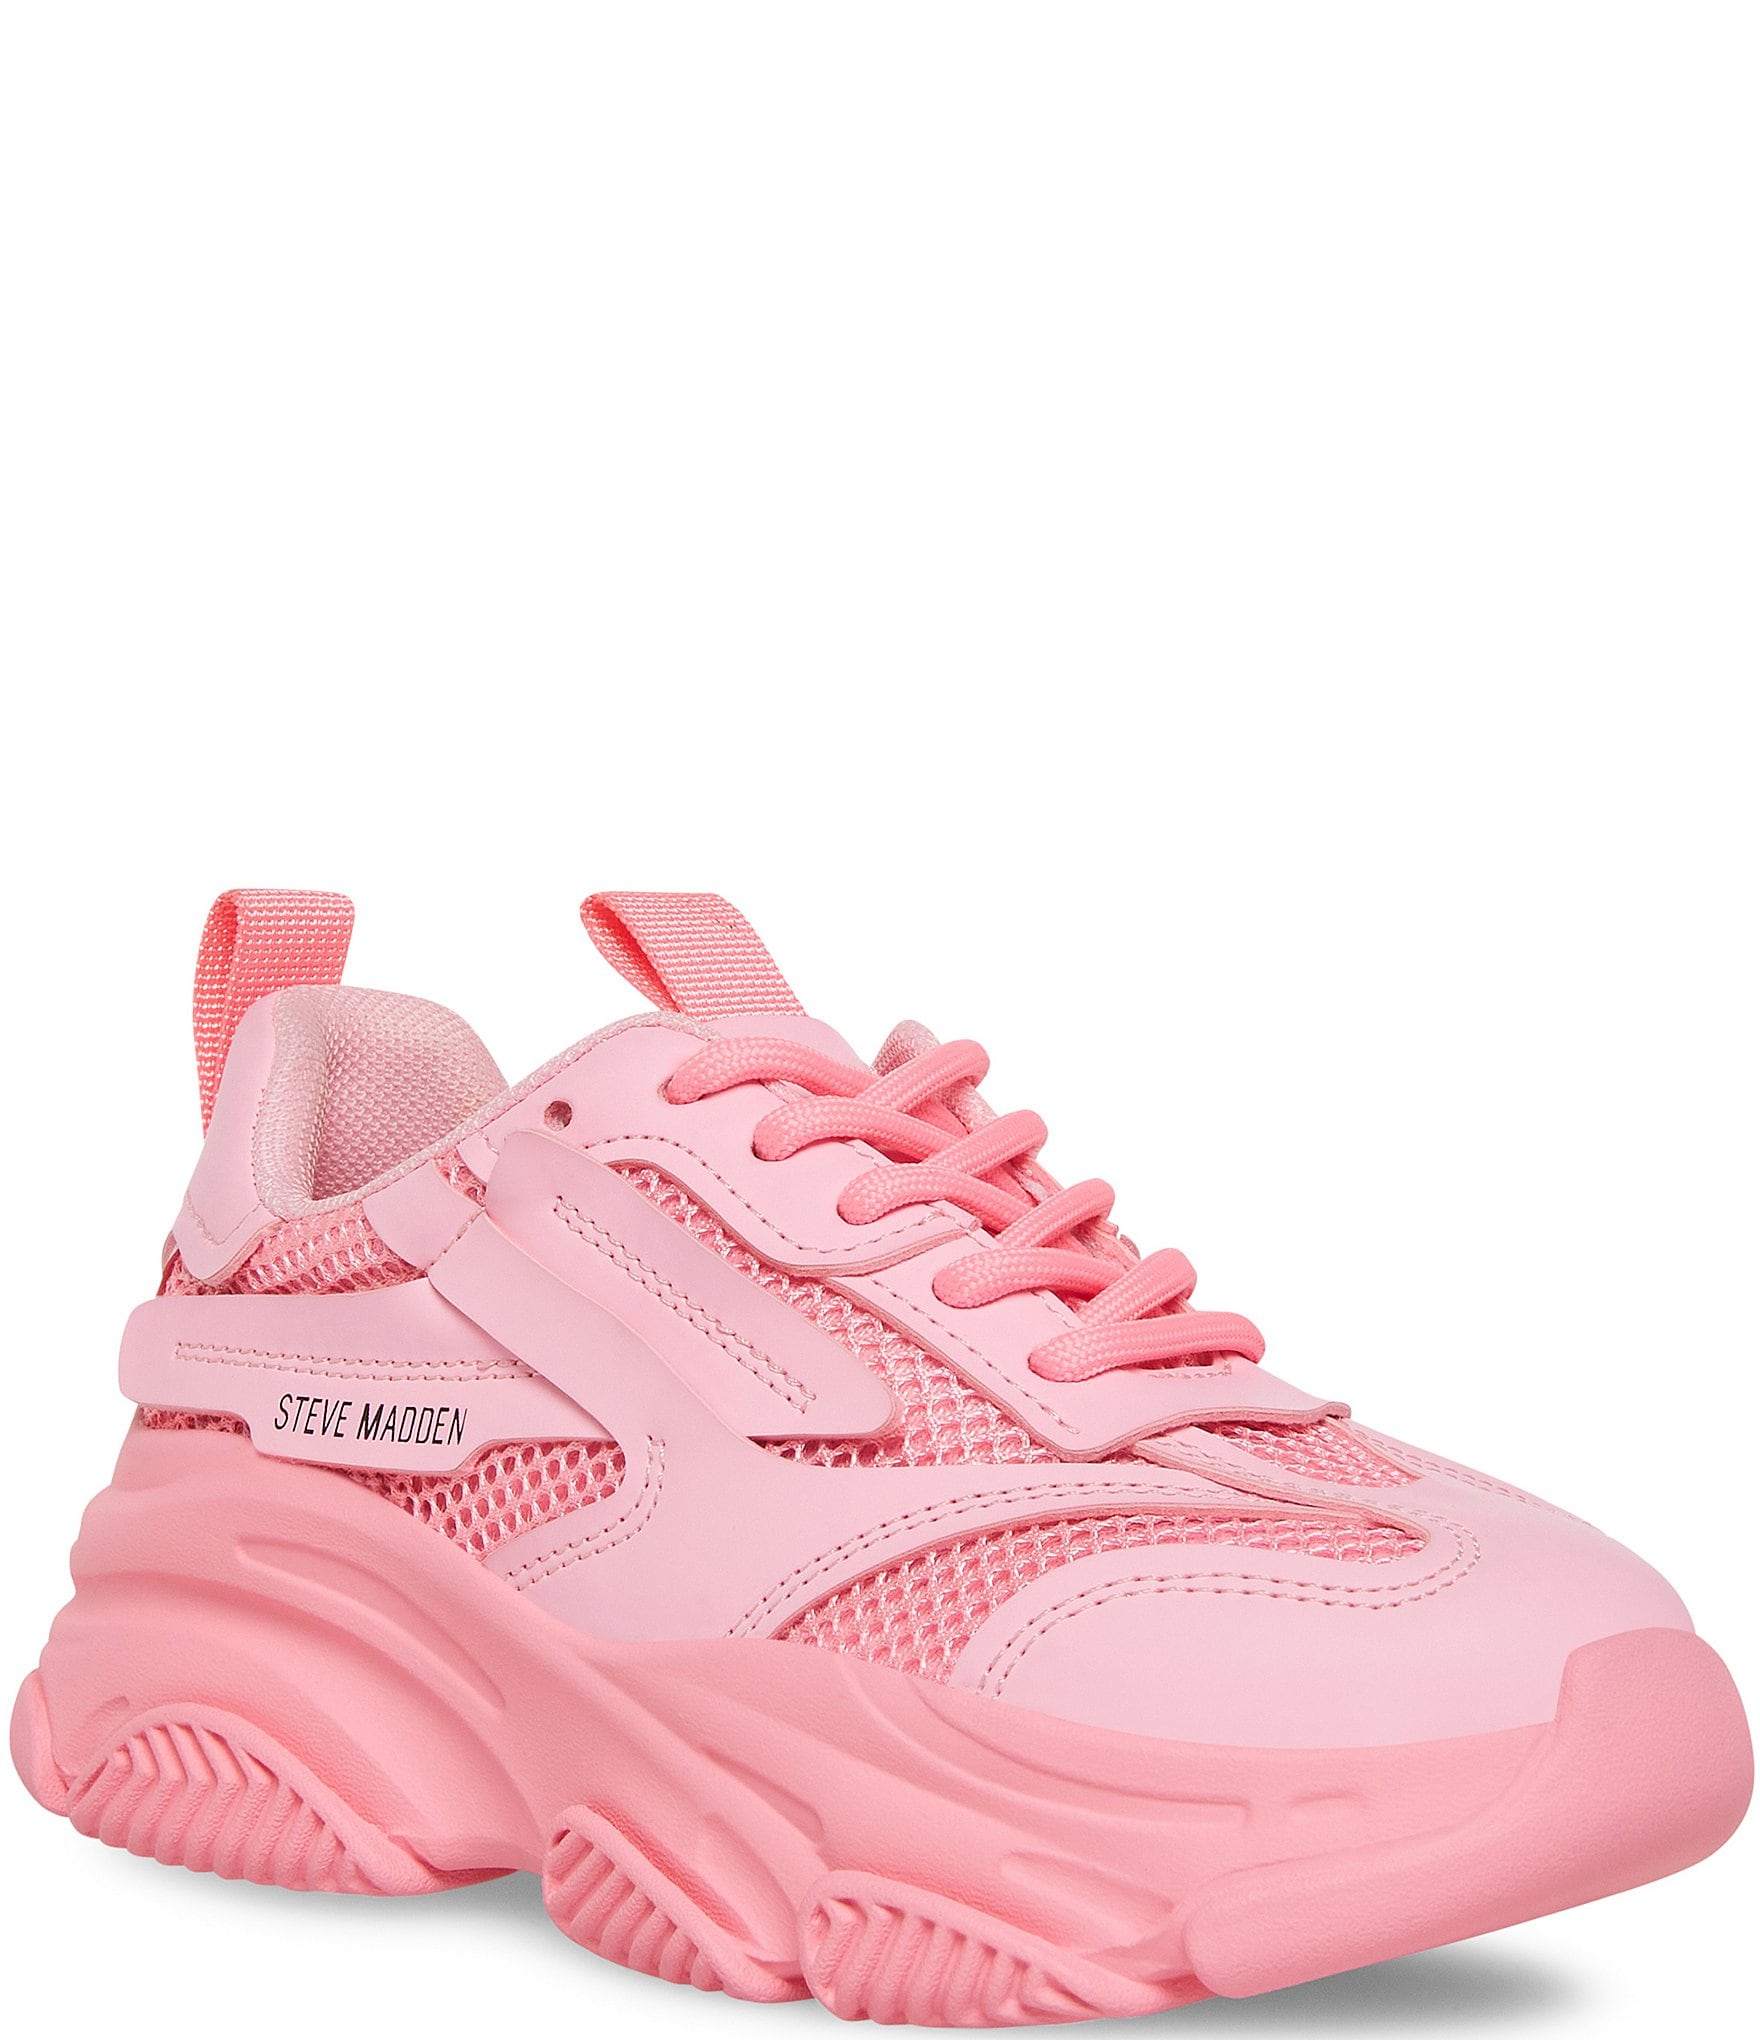 Steve Madden Kids' Jposession Sneaker Pink